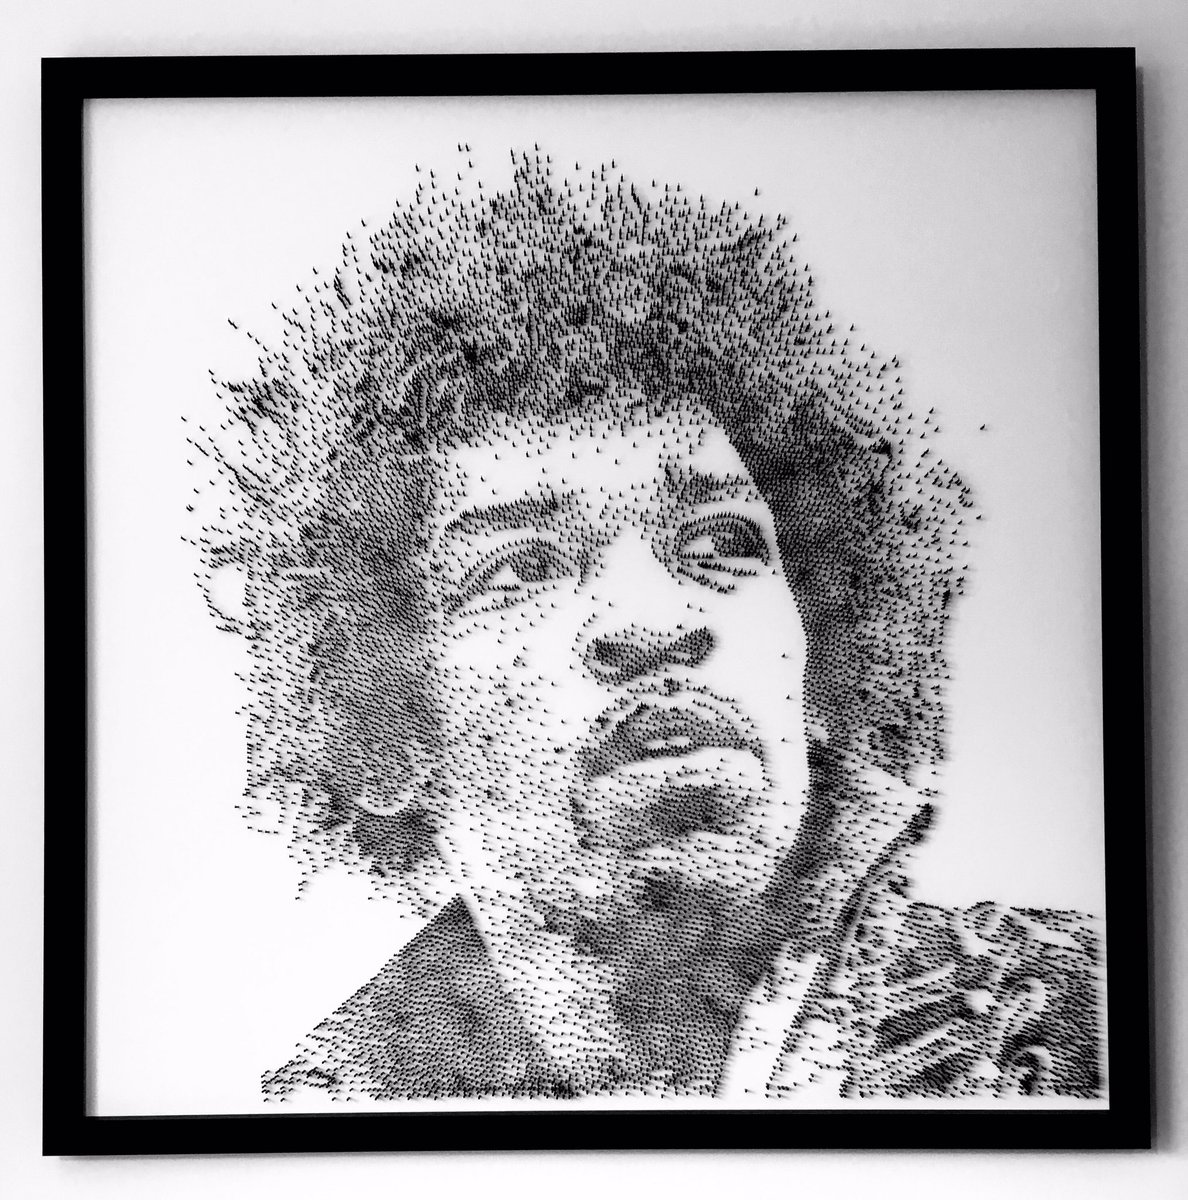 David Foster On Twitter New Jimi Hendrix Artwork Made From 12500